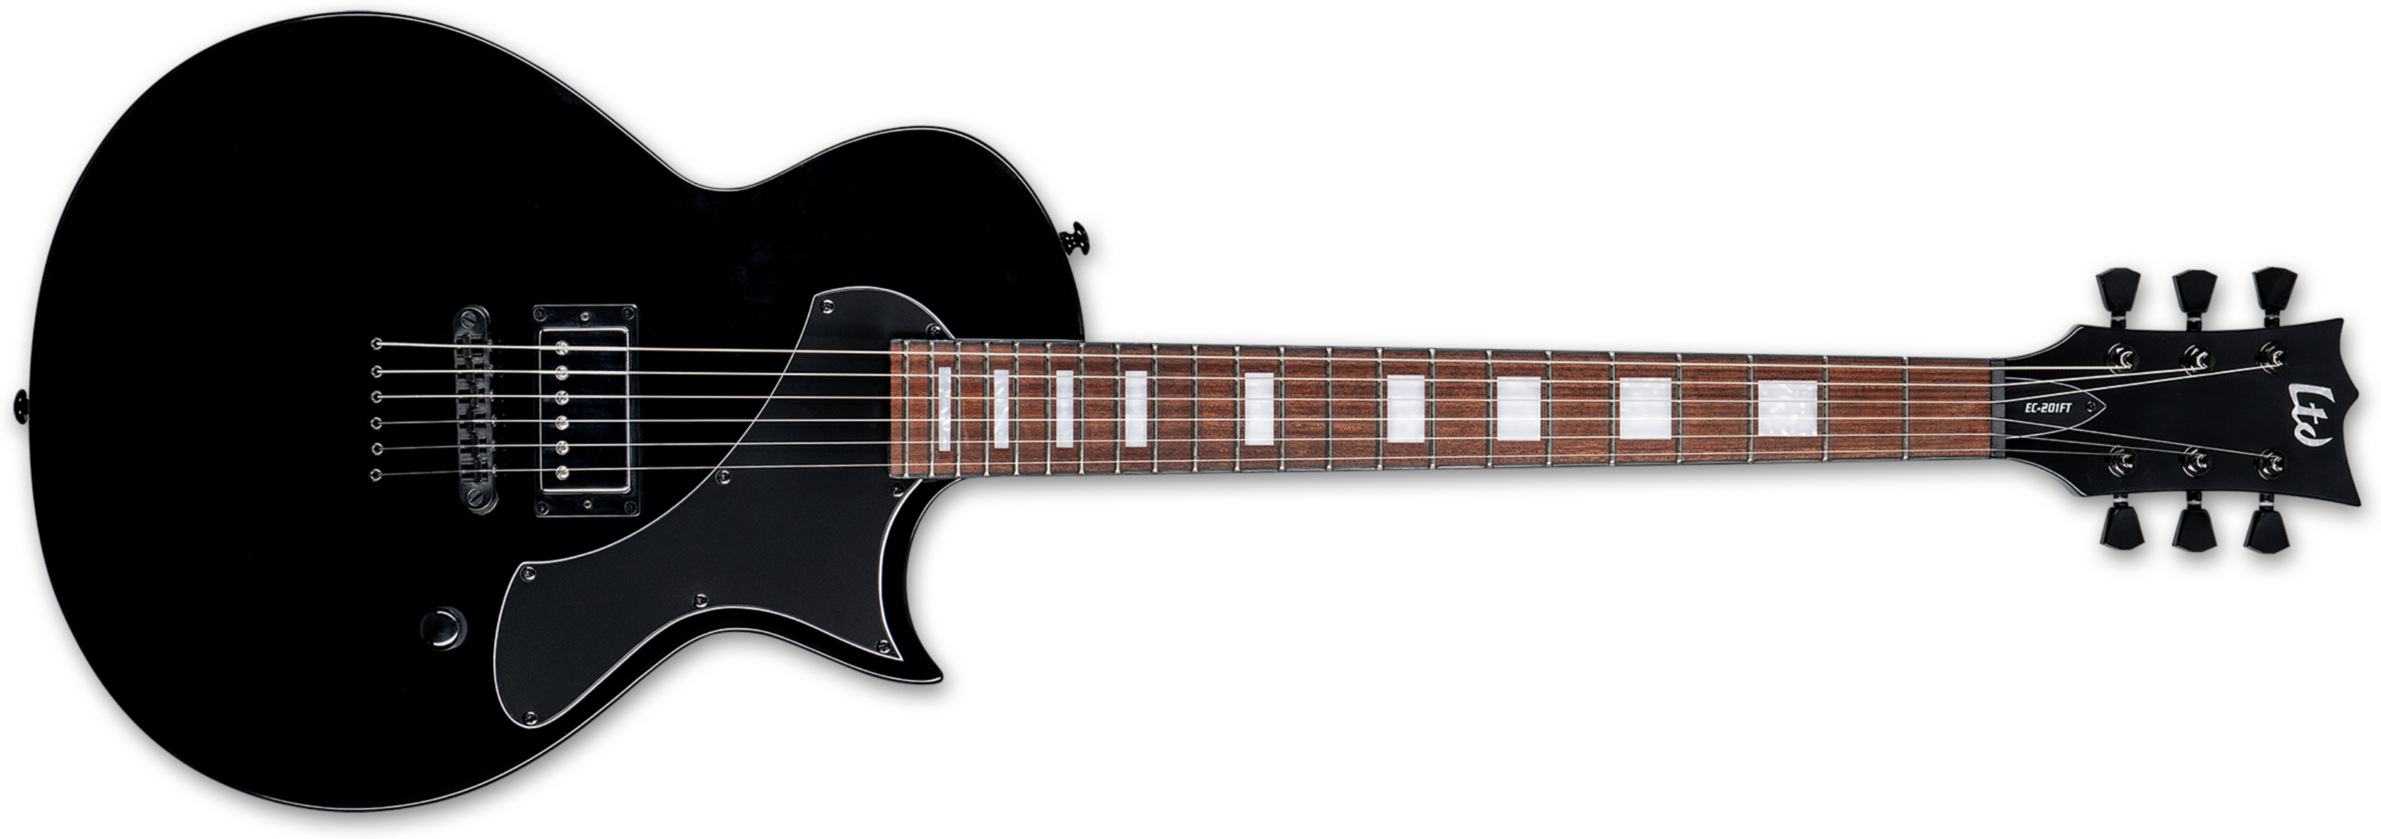 Ltd Ec-201 1h Ht Jat - Black - Metal electric guitar - Main picture